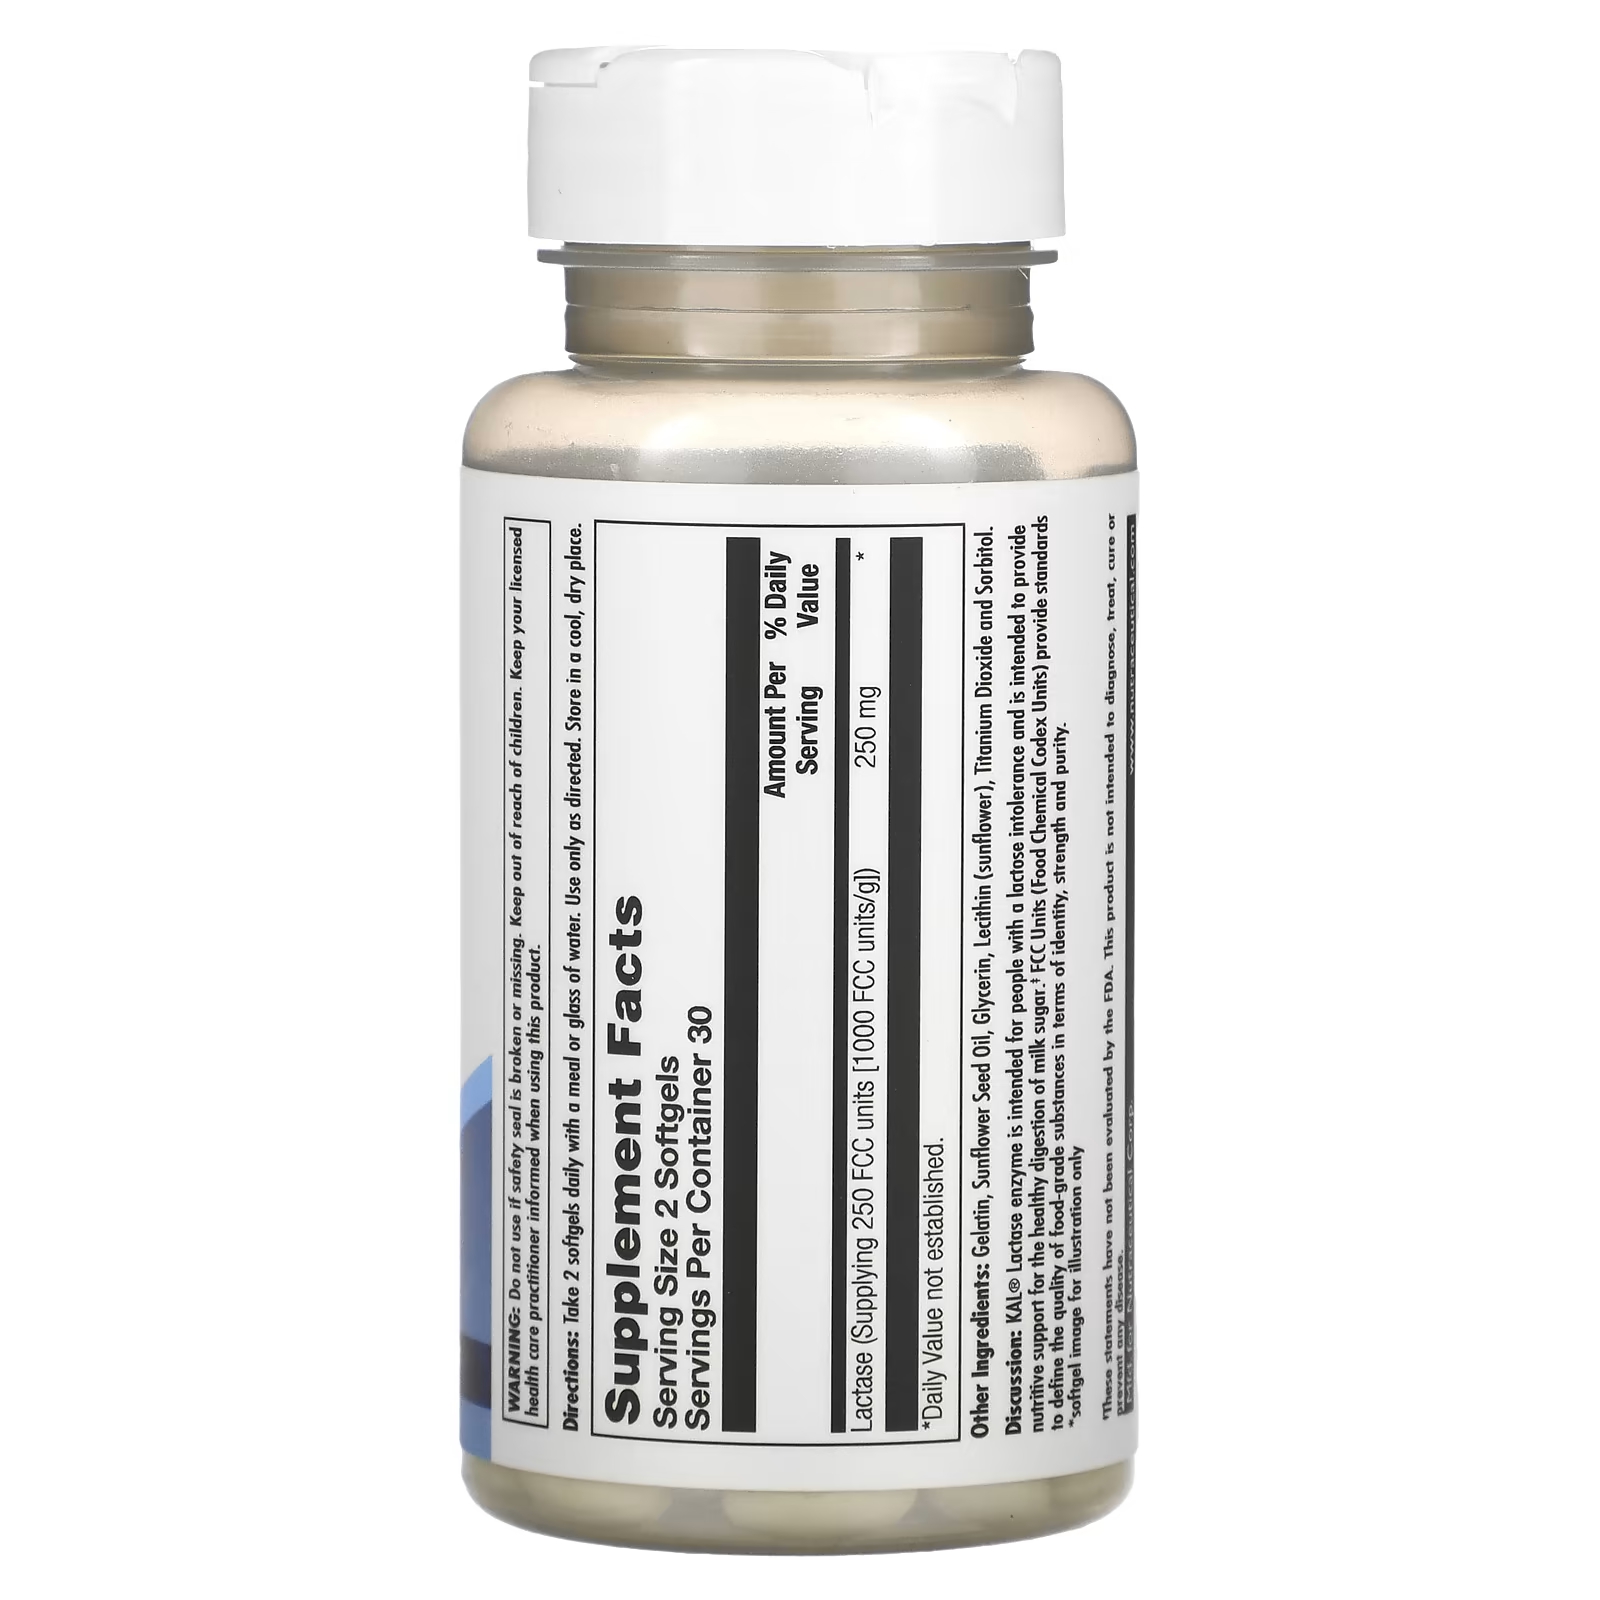 KAL Фермент лактаза 250 мг, 60 мягких таблеток (125 мг на мягкую таблетку)